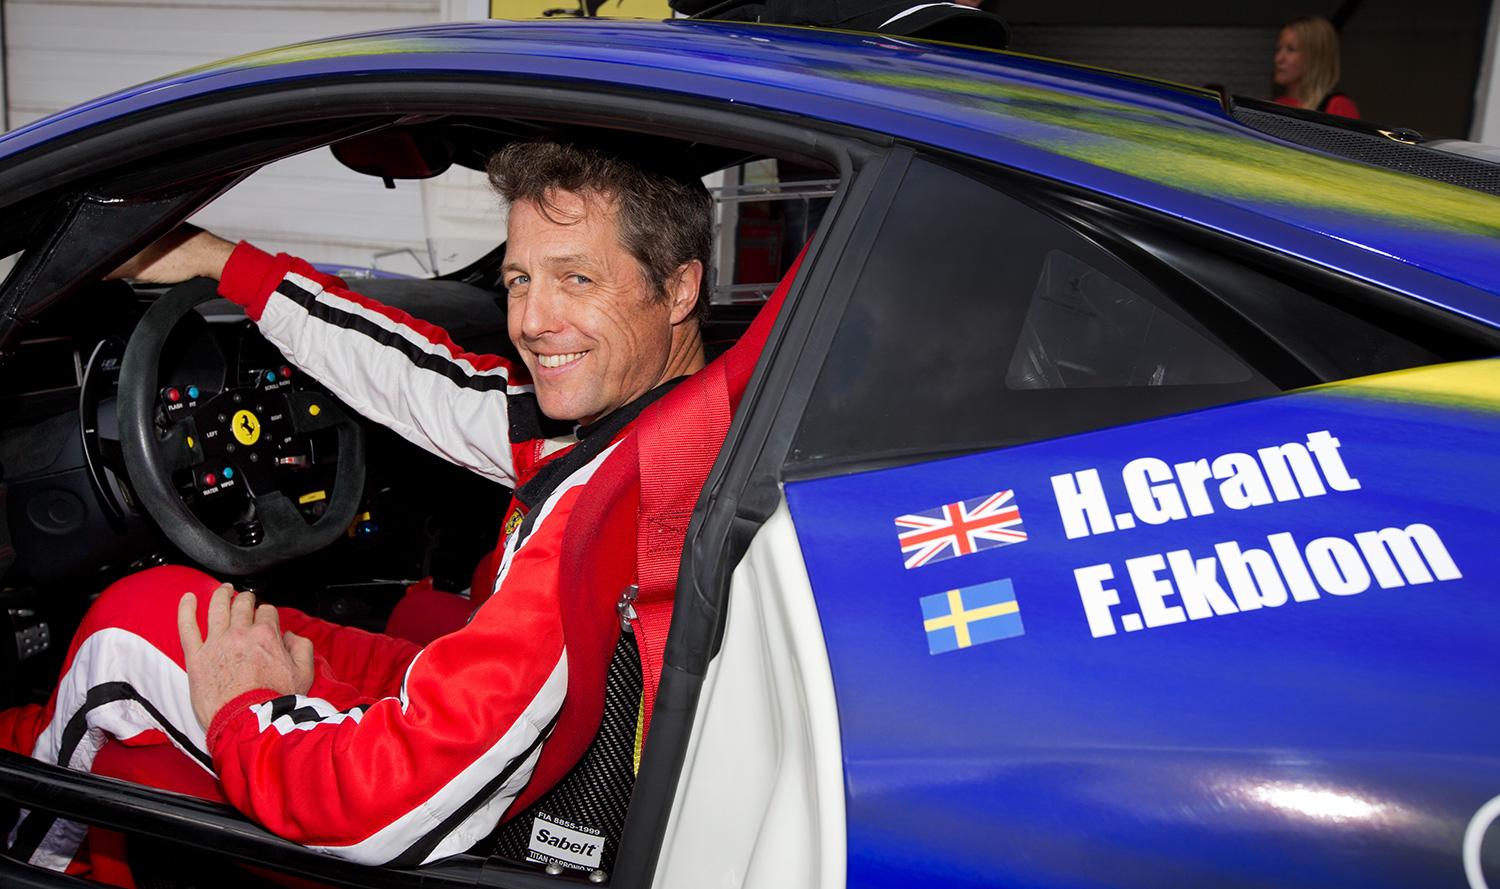 I välgörenhetsracet delar han Ferrari med svenske racerföraren Fredrik Ekblom.